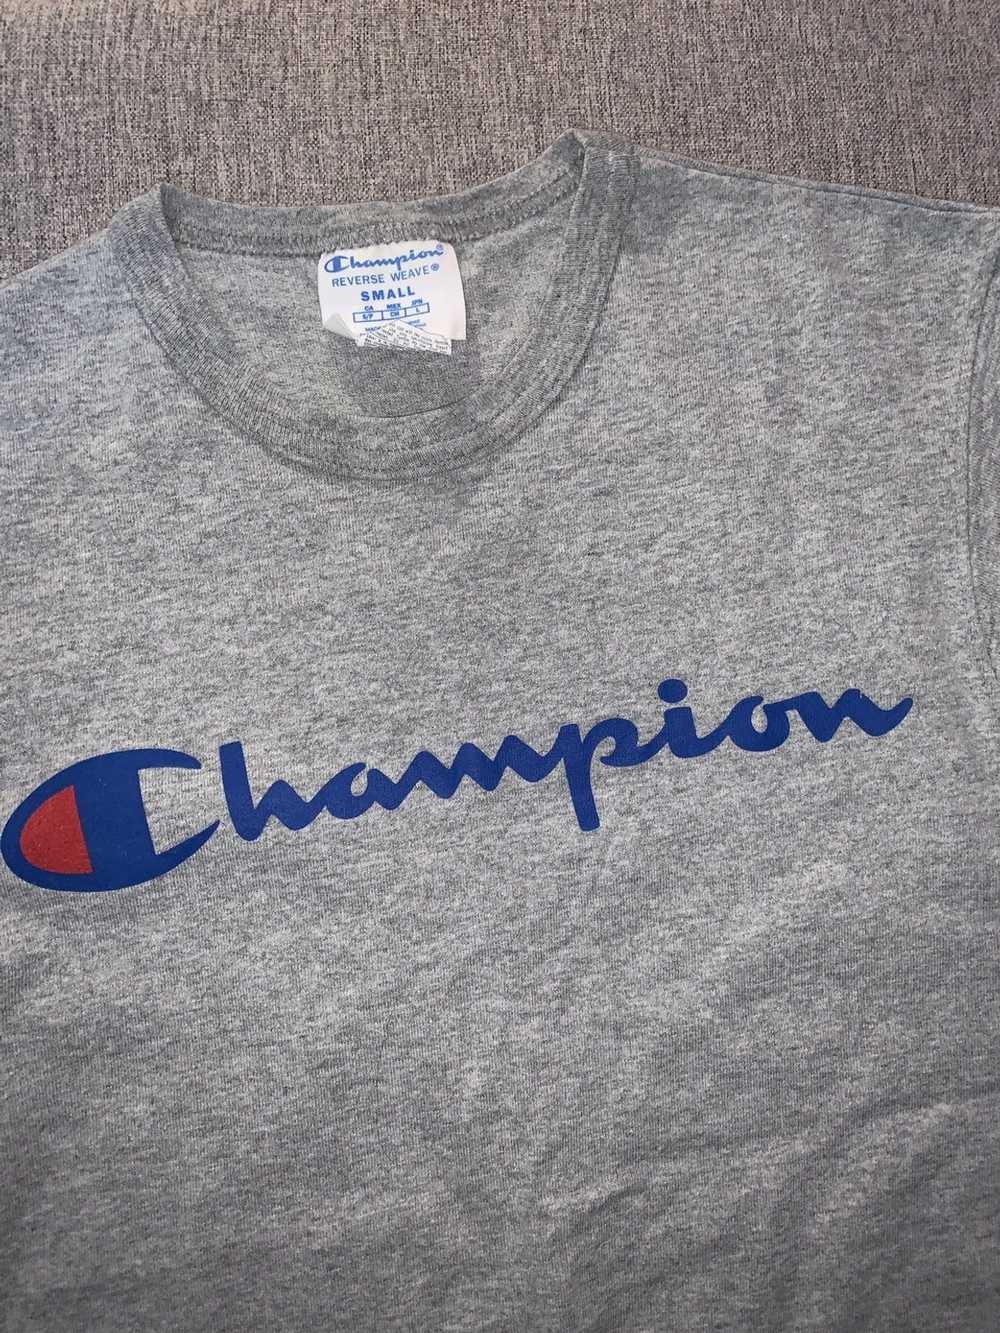 Champion Champion reverse weave t shirt - image 2